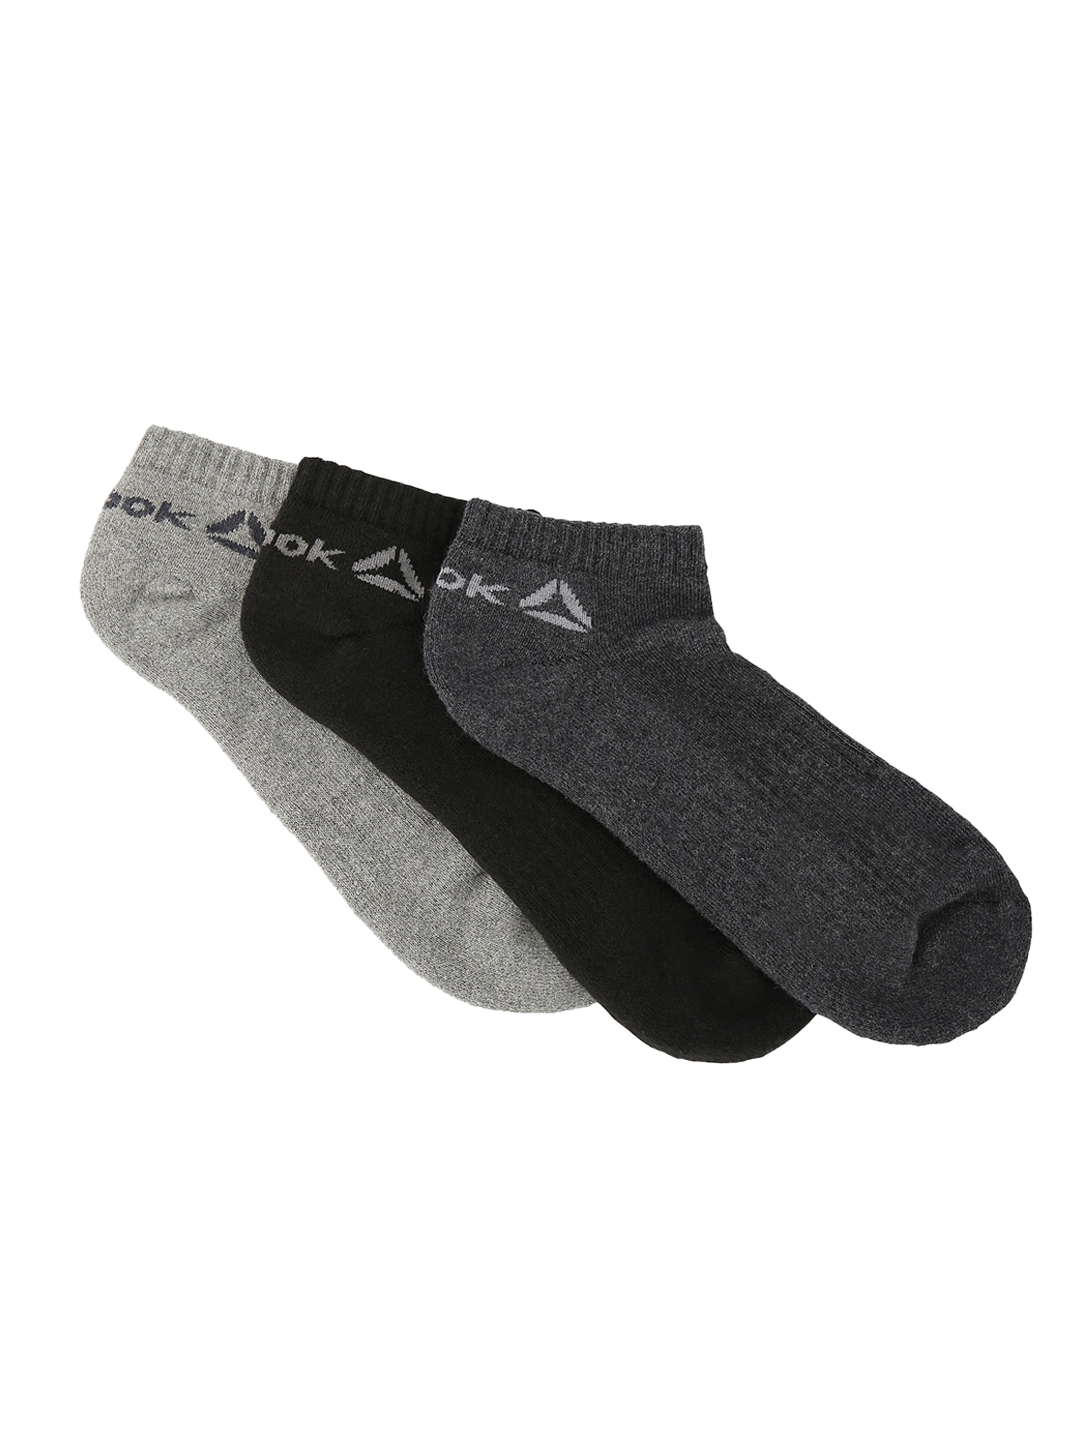 Reebok Men Pack Of 3 Assorted Ankle Length Socks